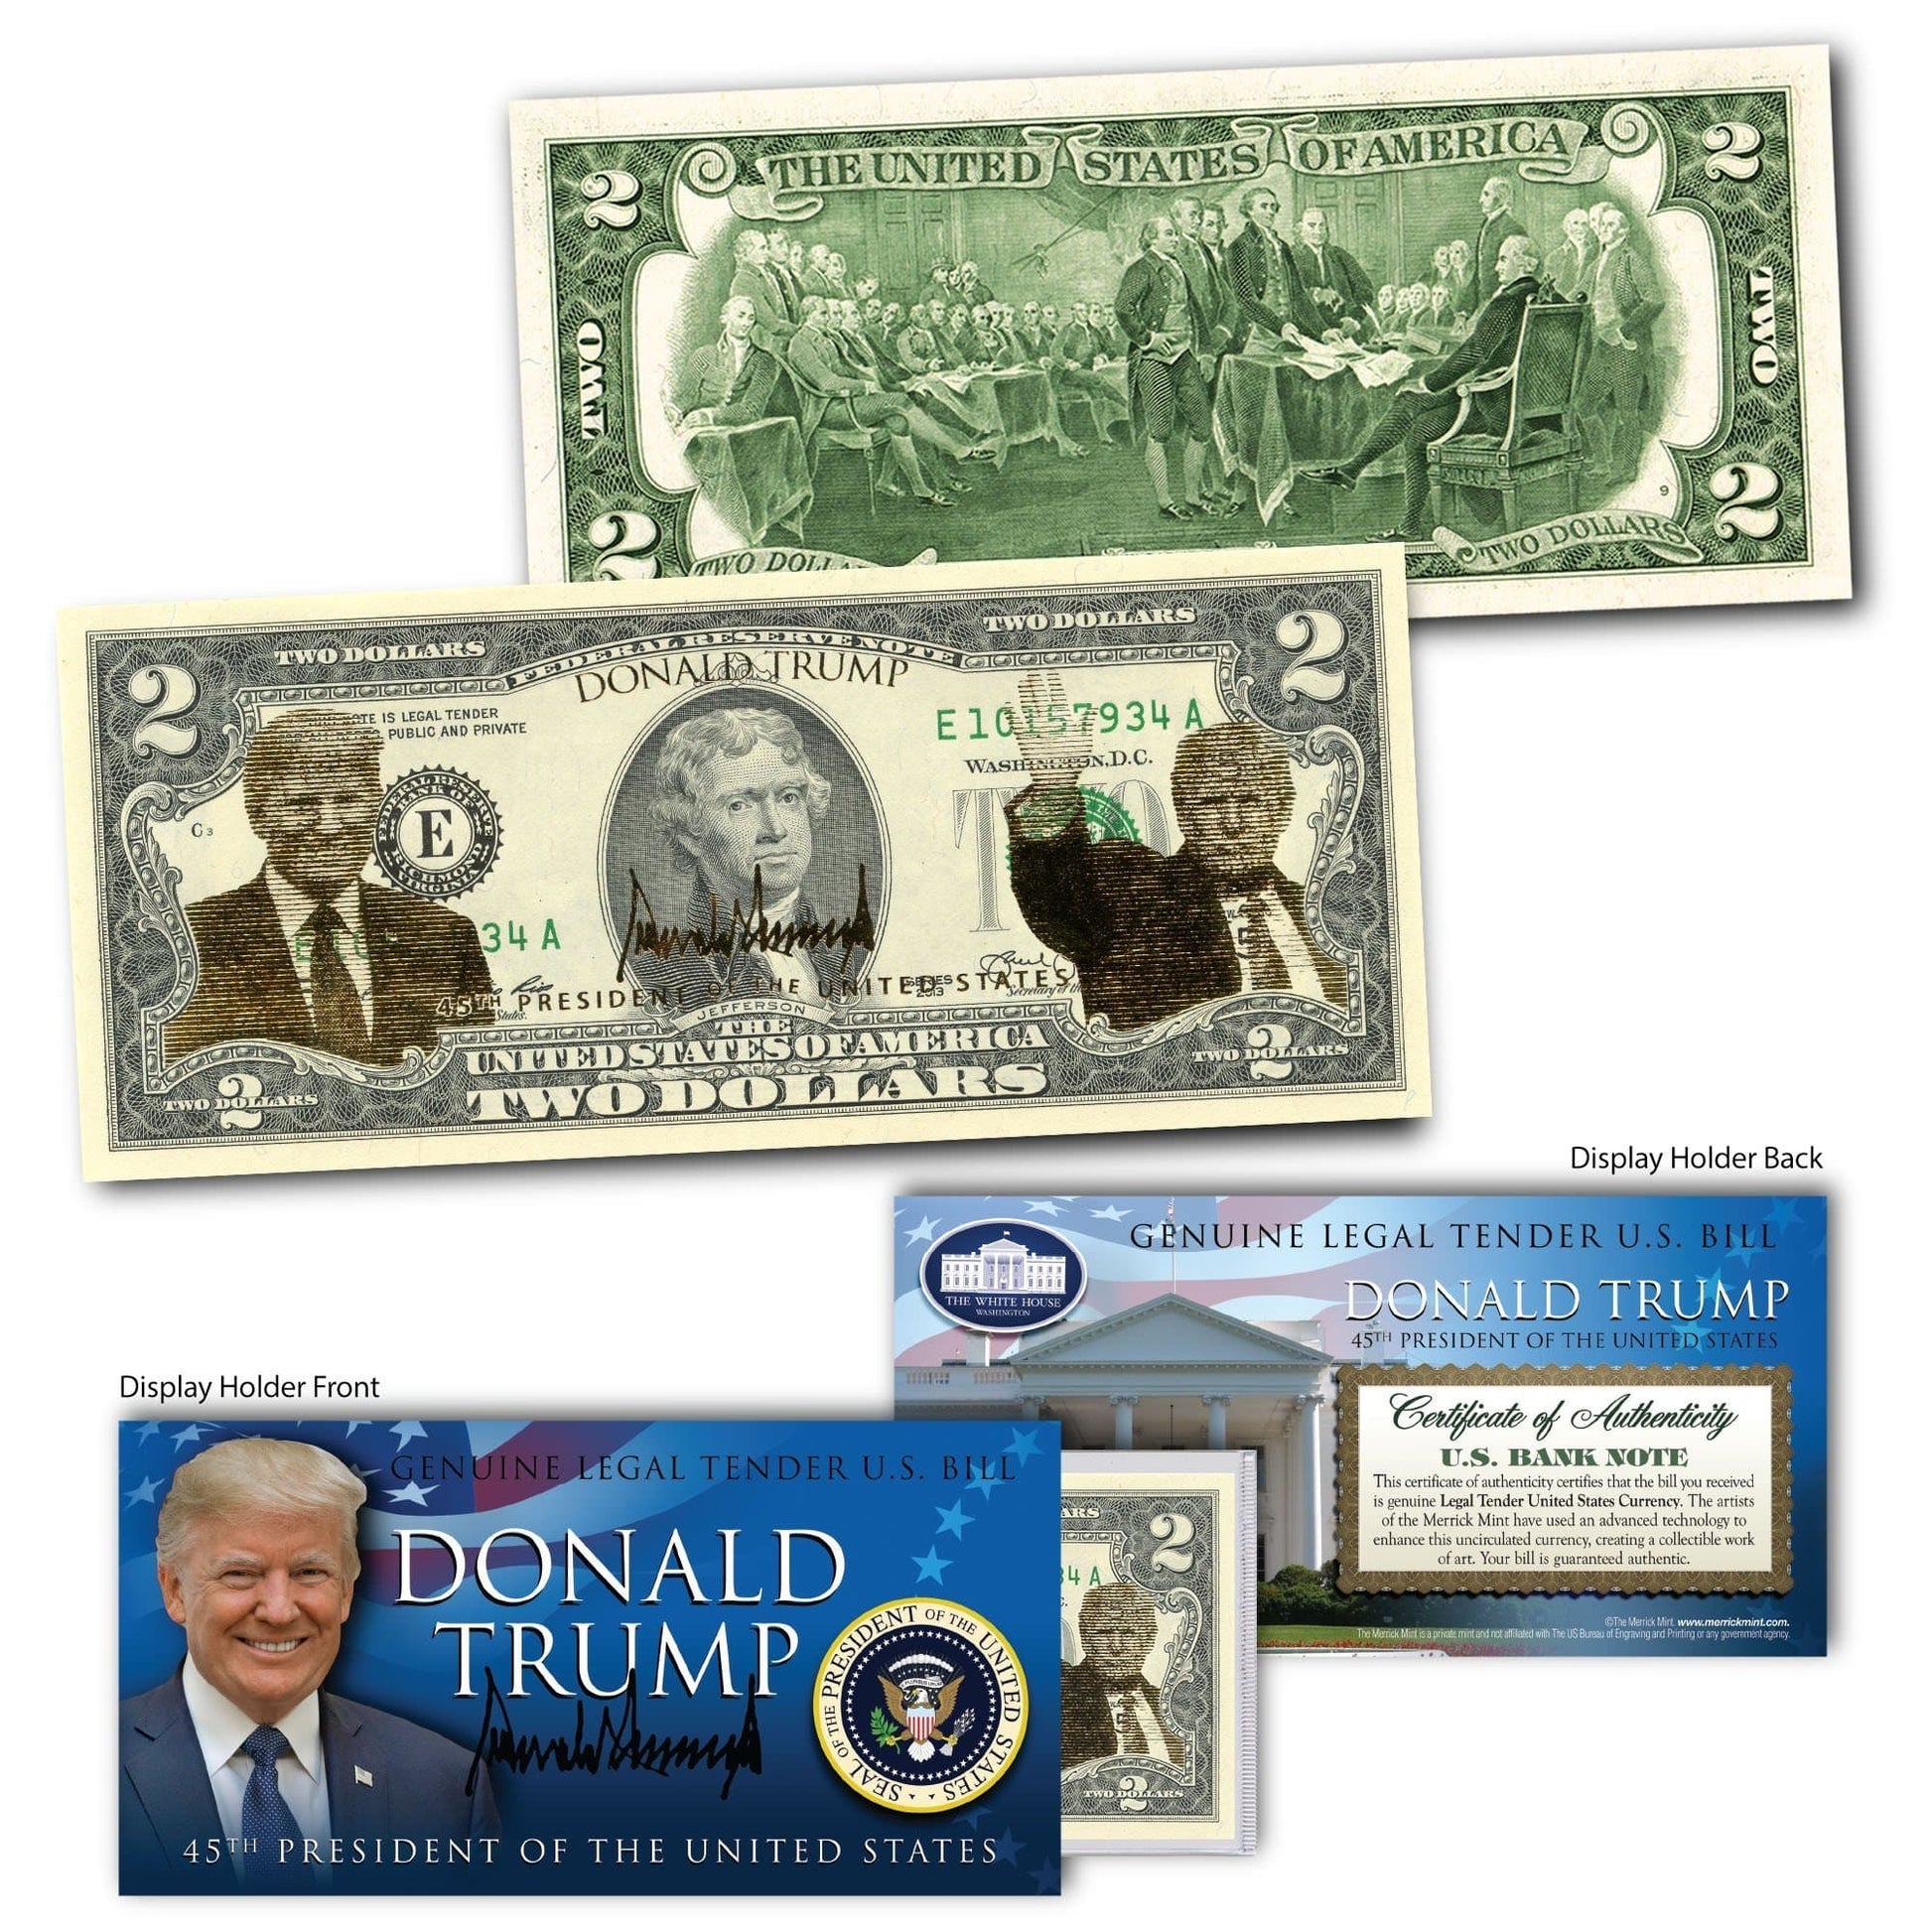 Donald Trump - Gold Foiled - Genuine Legal Tender U.S. $2 Bill - Proud Patriots